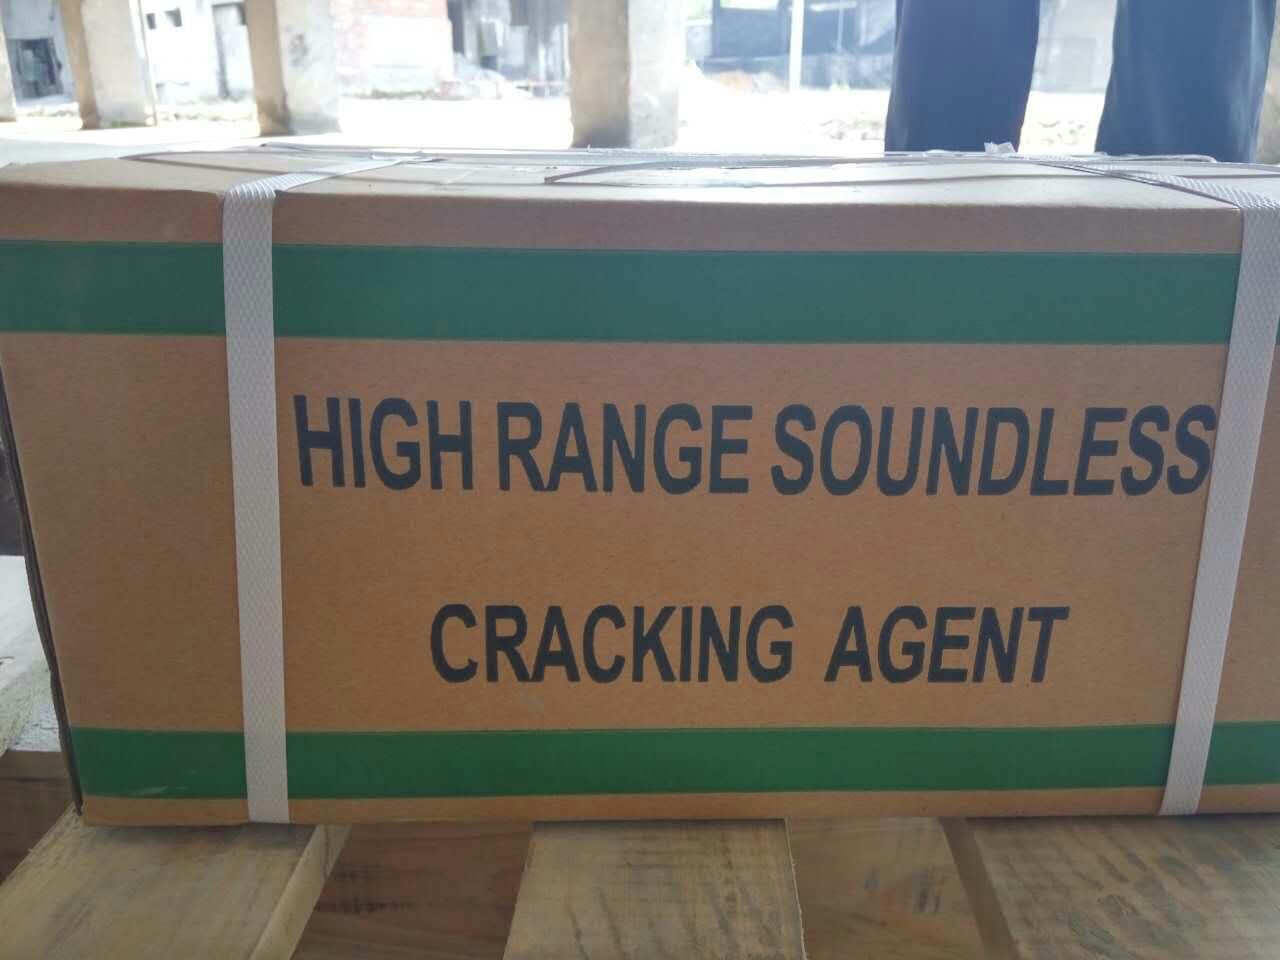 HSCA soundless cracking agent for rock demolition concrete demolition quarrying cracking